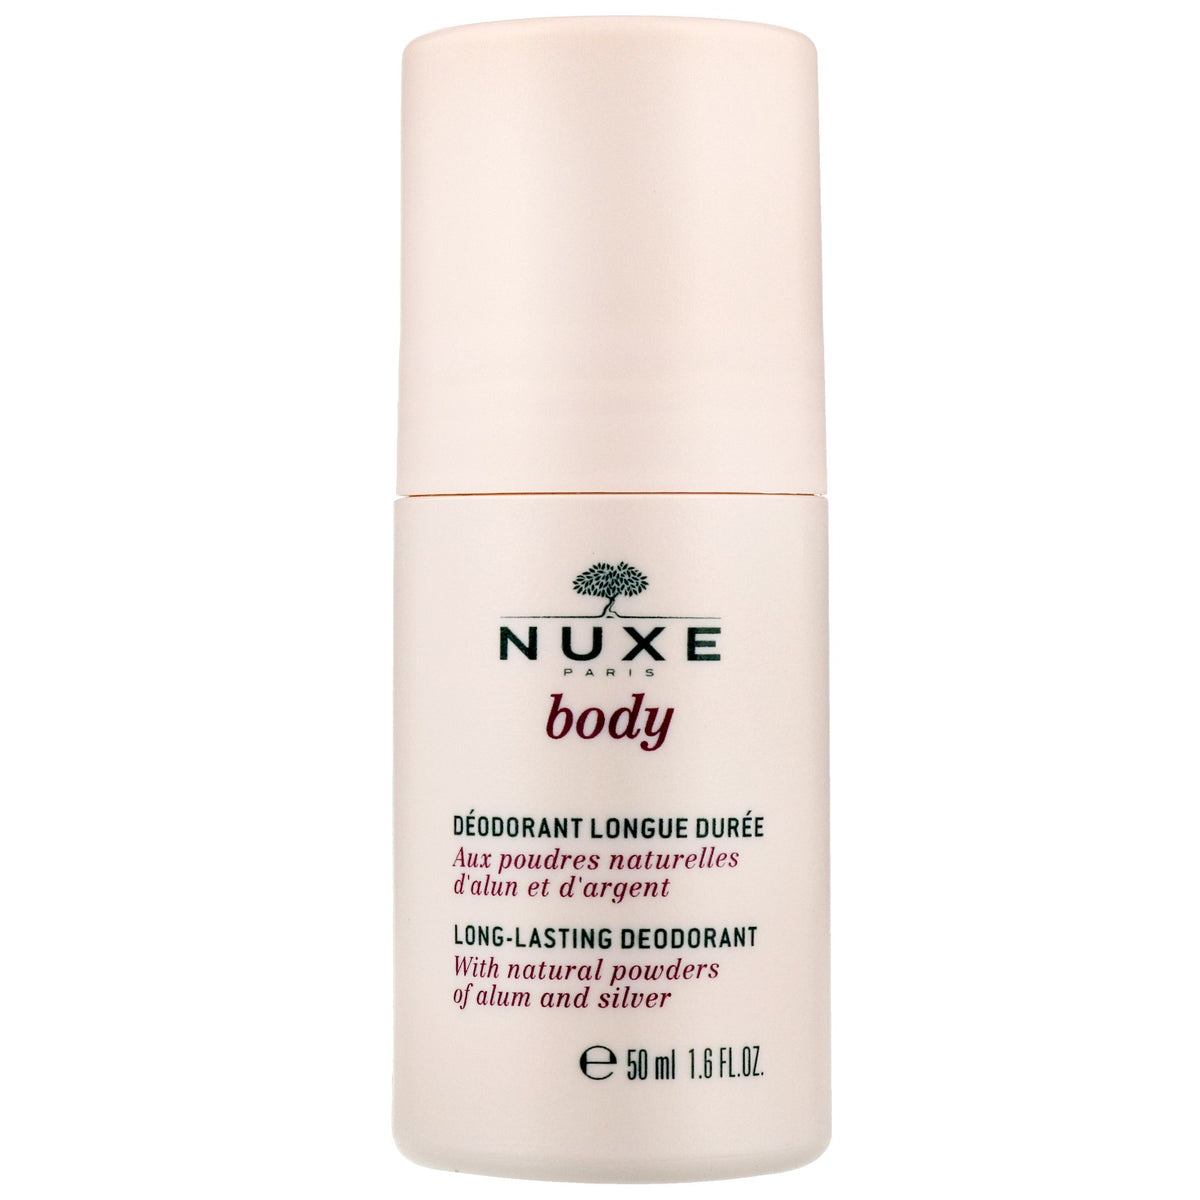 Nuxe Body Deodorante Lunga Durata 50ml